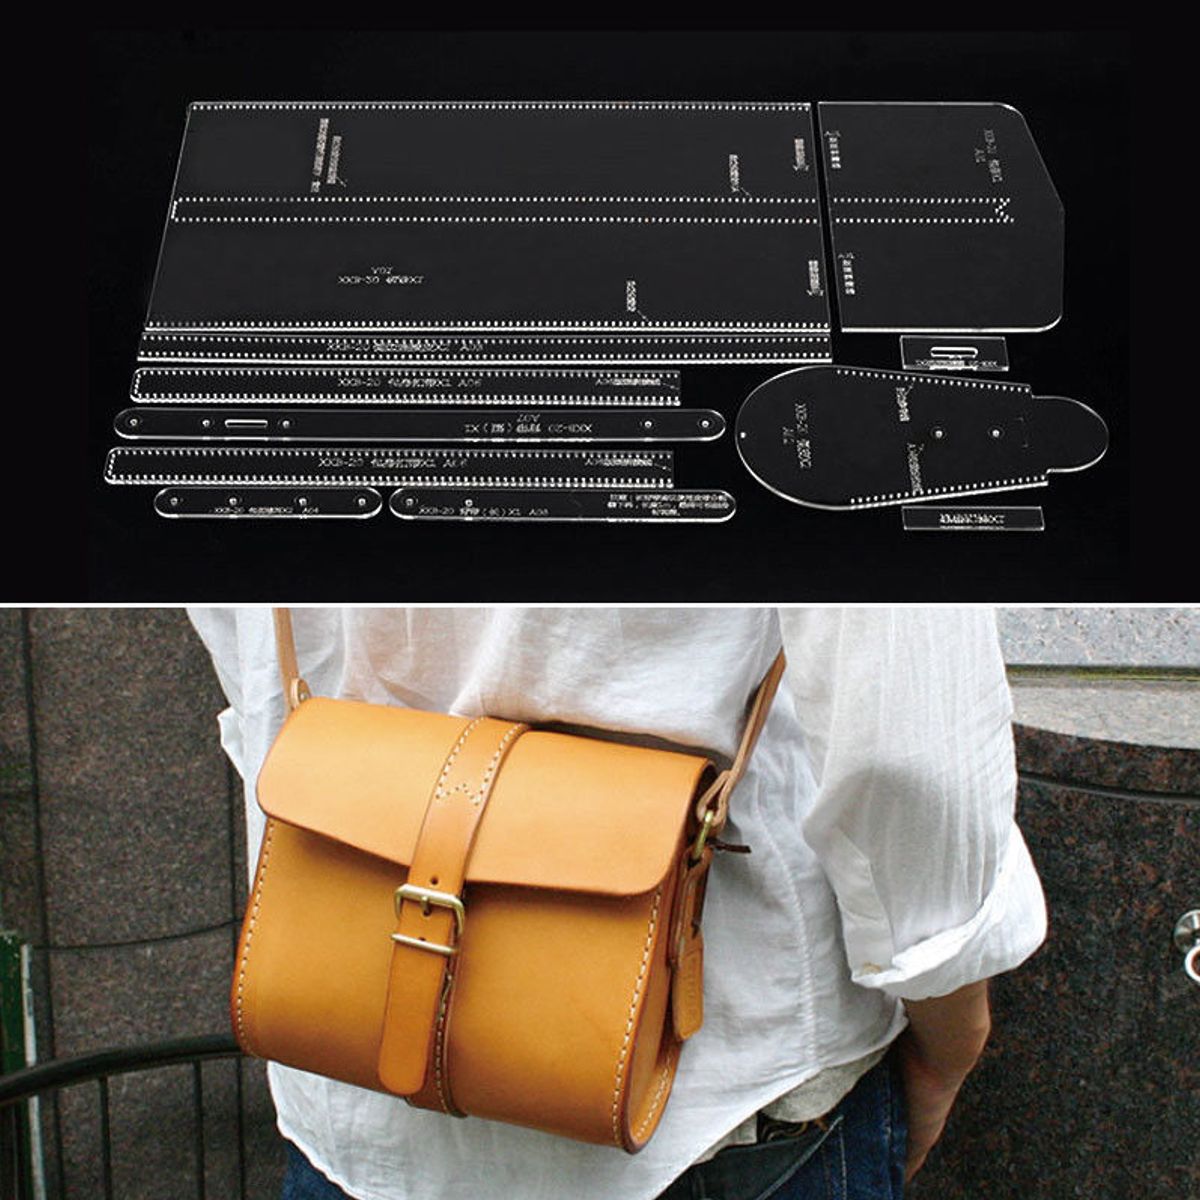 Acrylic-Bag-Pattern-Stencil-Template-Shoulder-Bag-Handmade-Leather-Craft-Tool-DIY-Template-Set-1356059